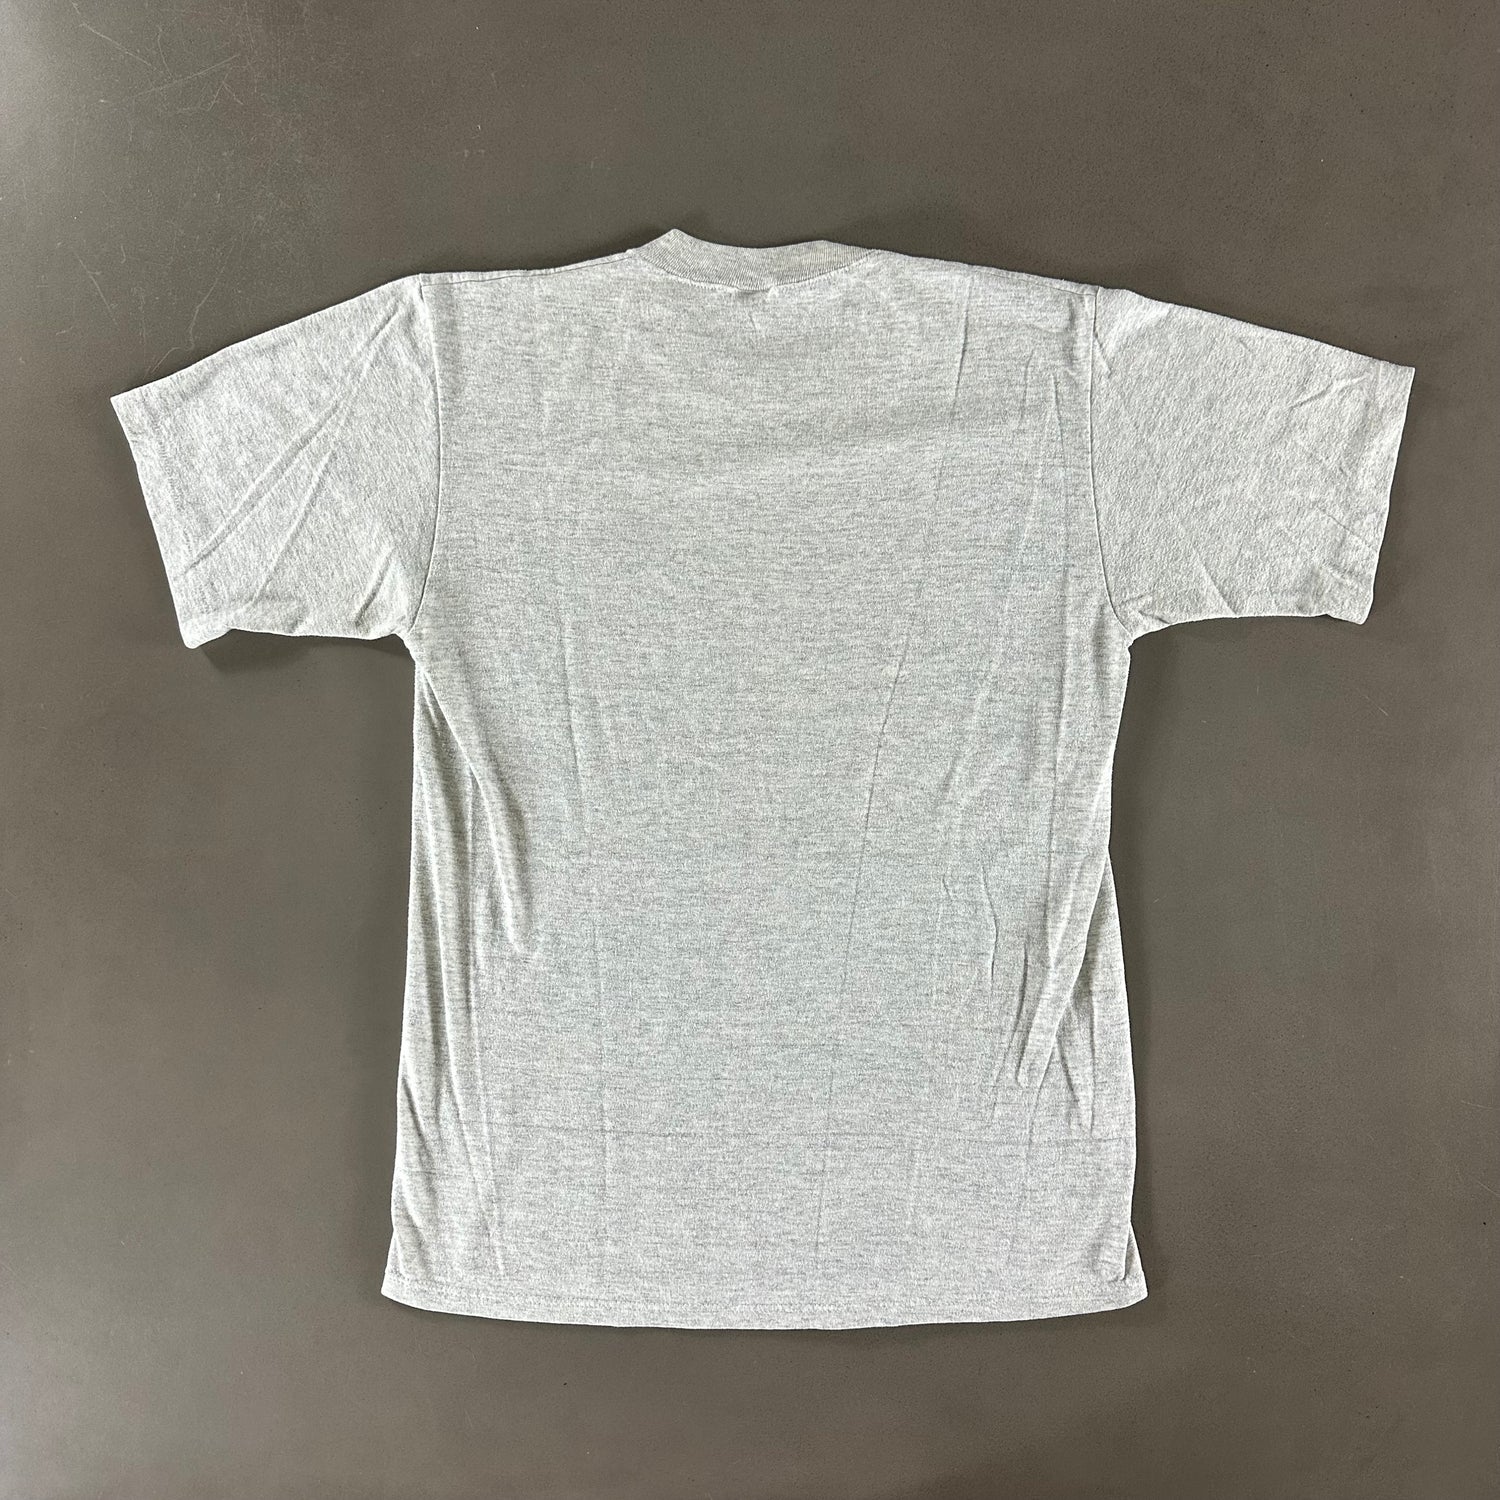 Vintage 1990s Auburn University T-shirt size Large